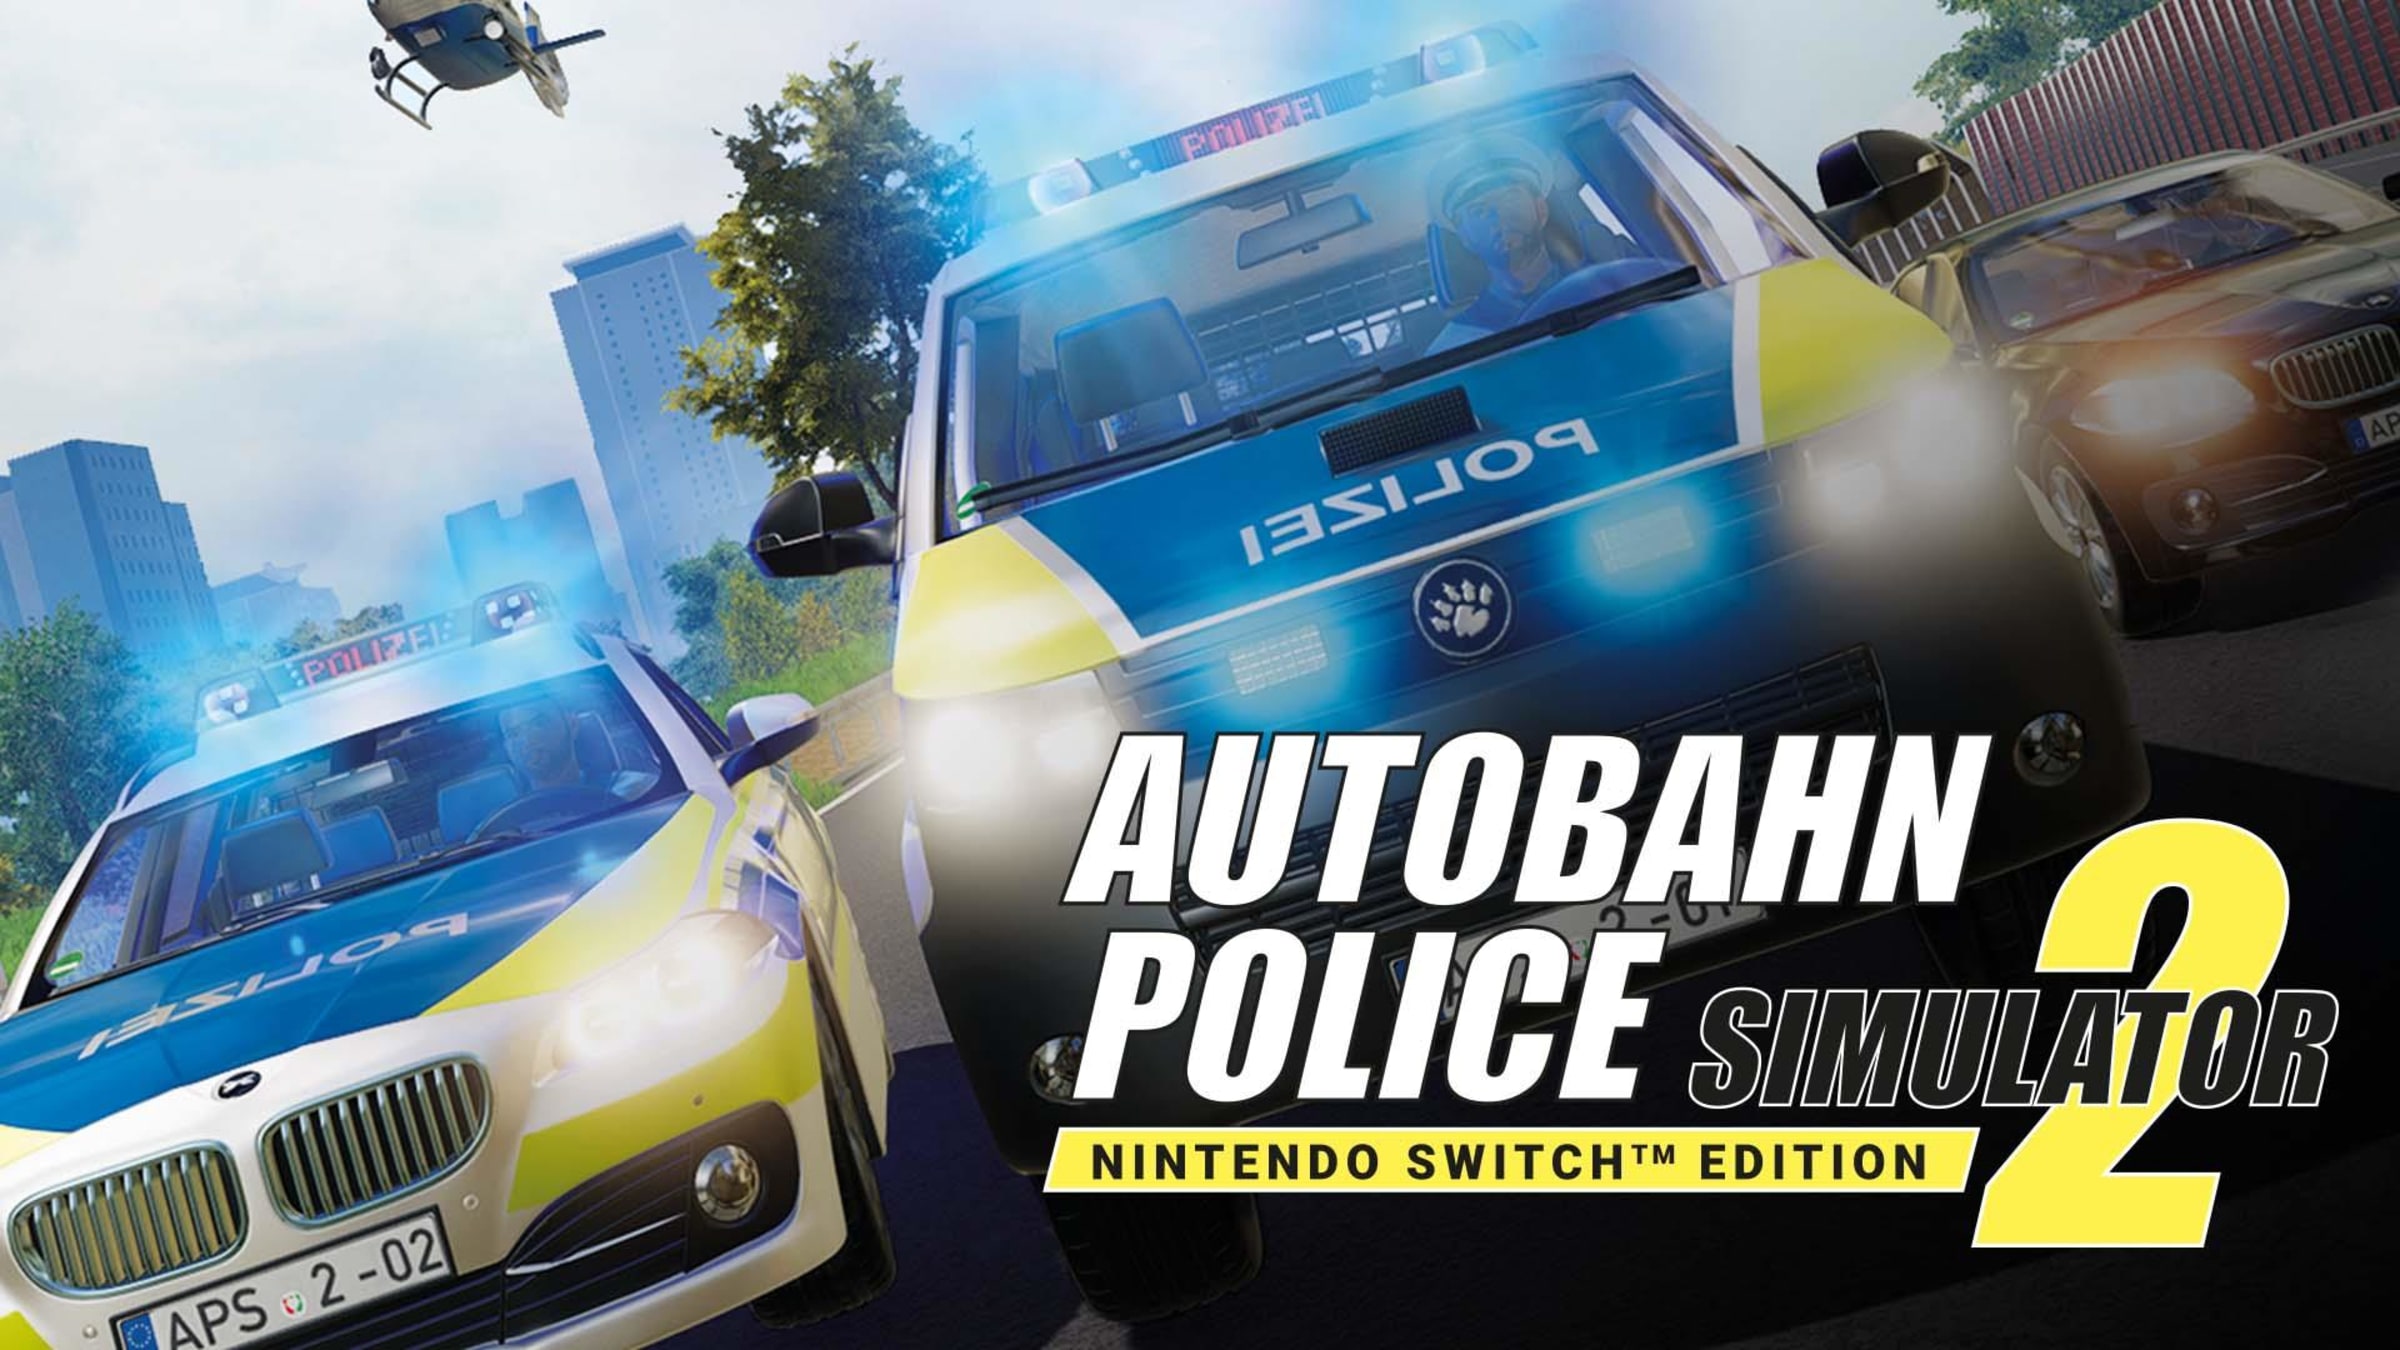 Autobahn Polizei Simulator 2 Nintendo Switch™ Edition pour Nintendo